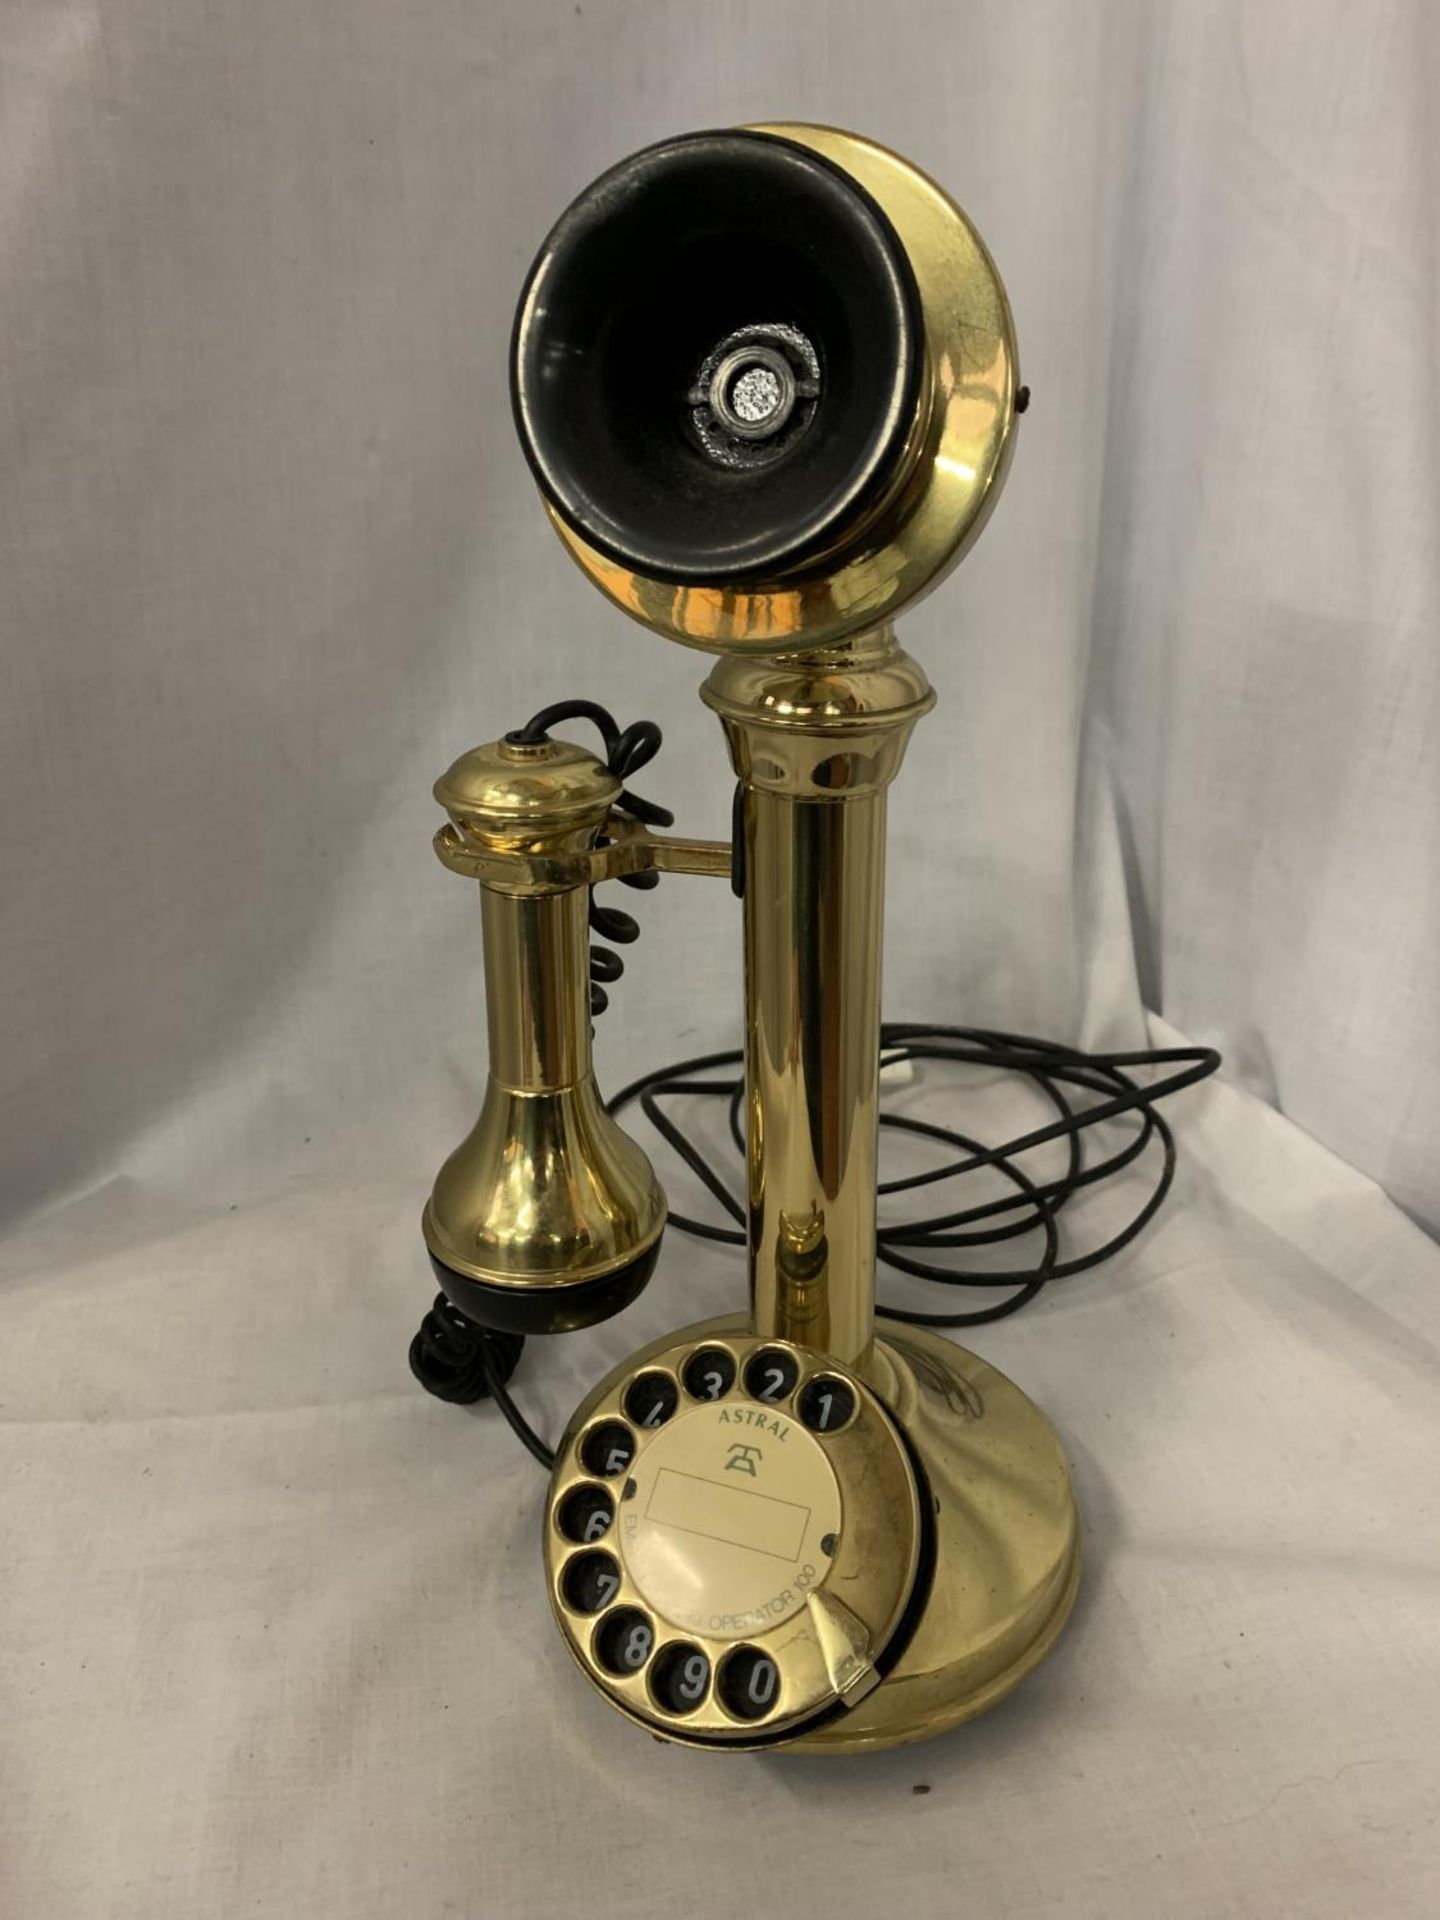 A BRASS VINTAGE STYLE TELEPHONE